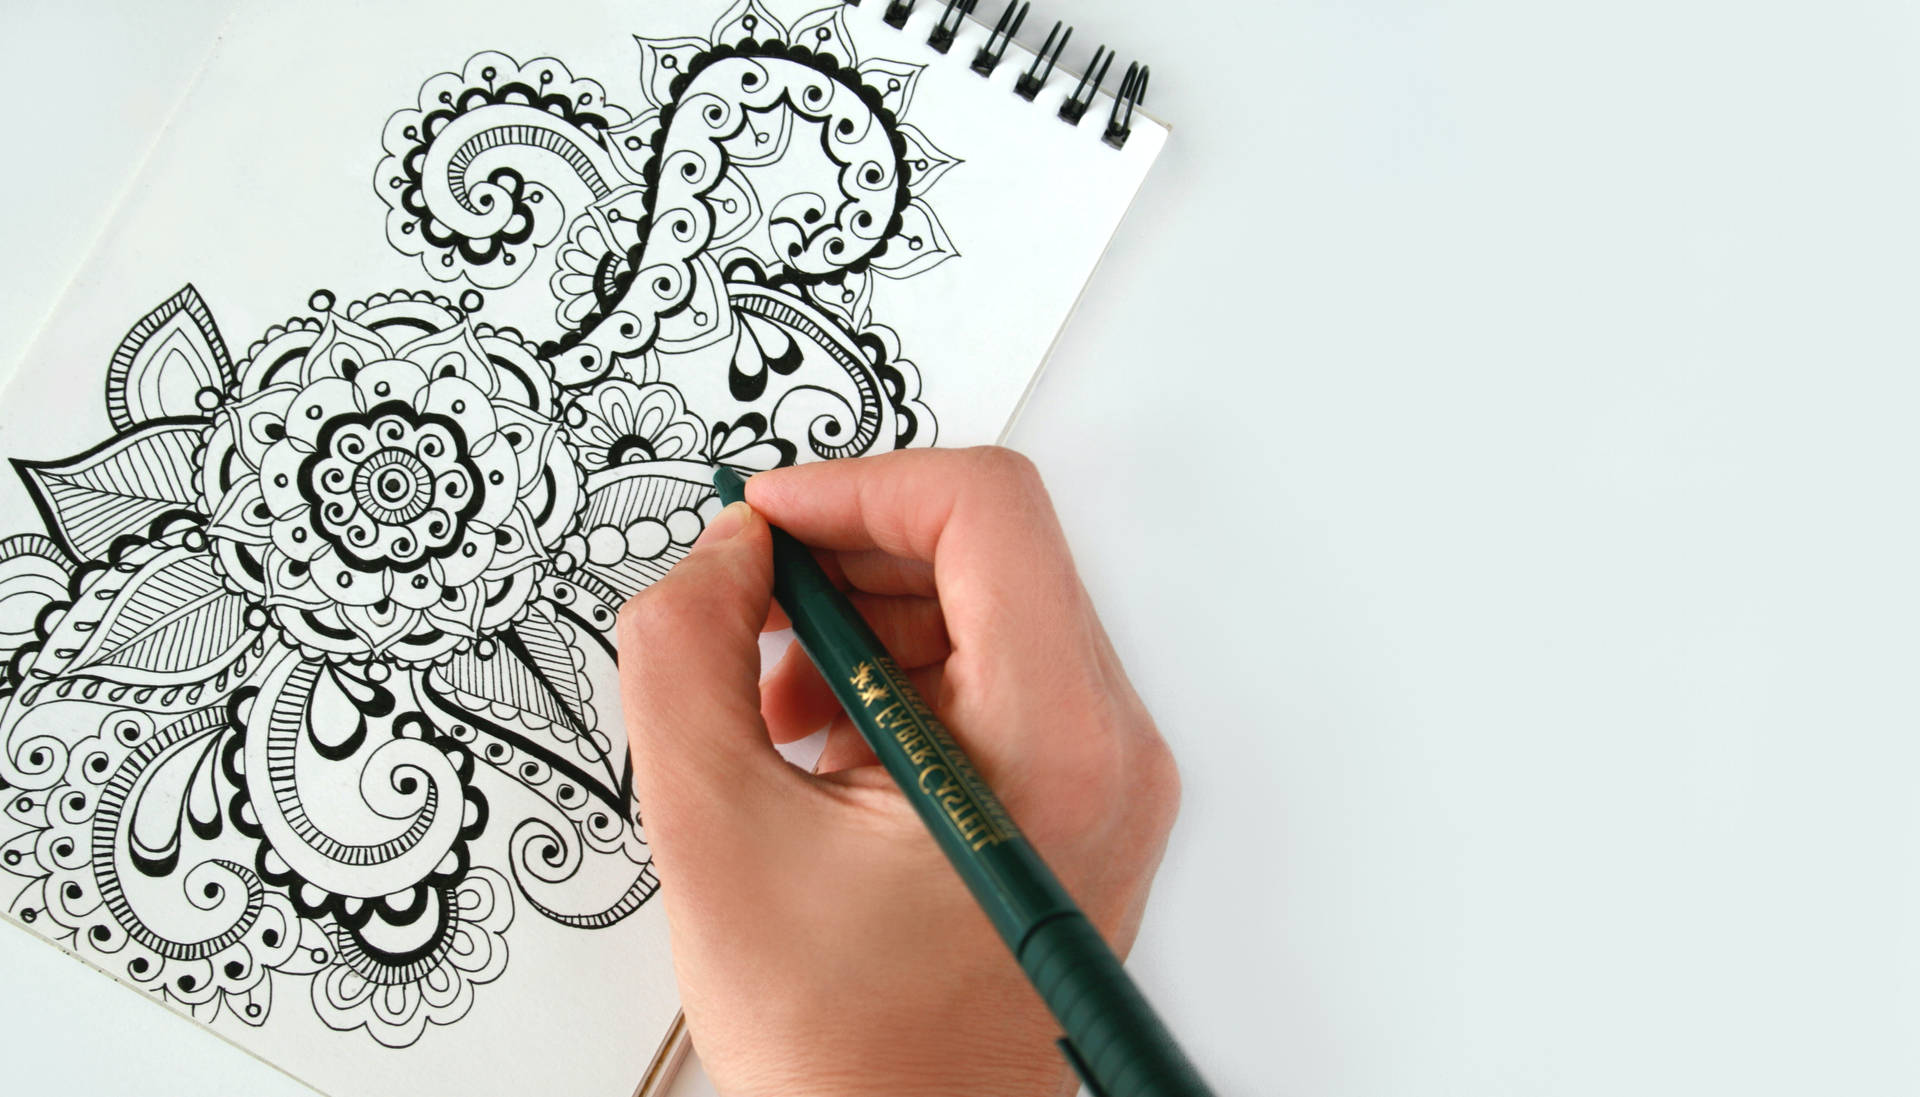 Free Pencil Drawing Wallpaper Downloads, [100+] Pencil Drawing Wallpapers  for FREE 